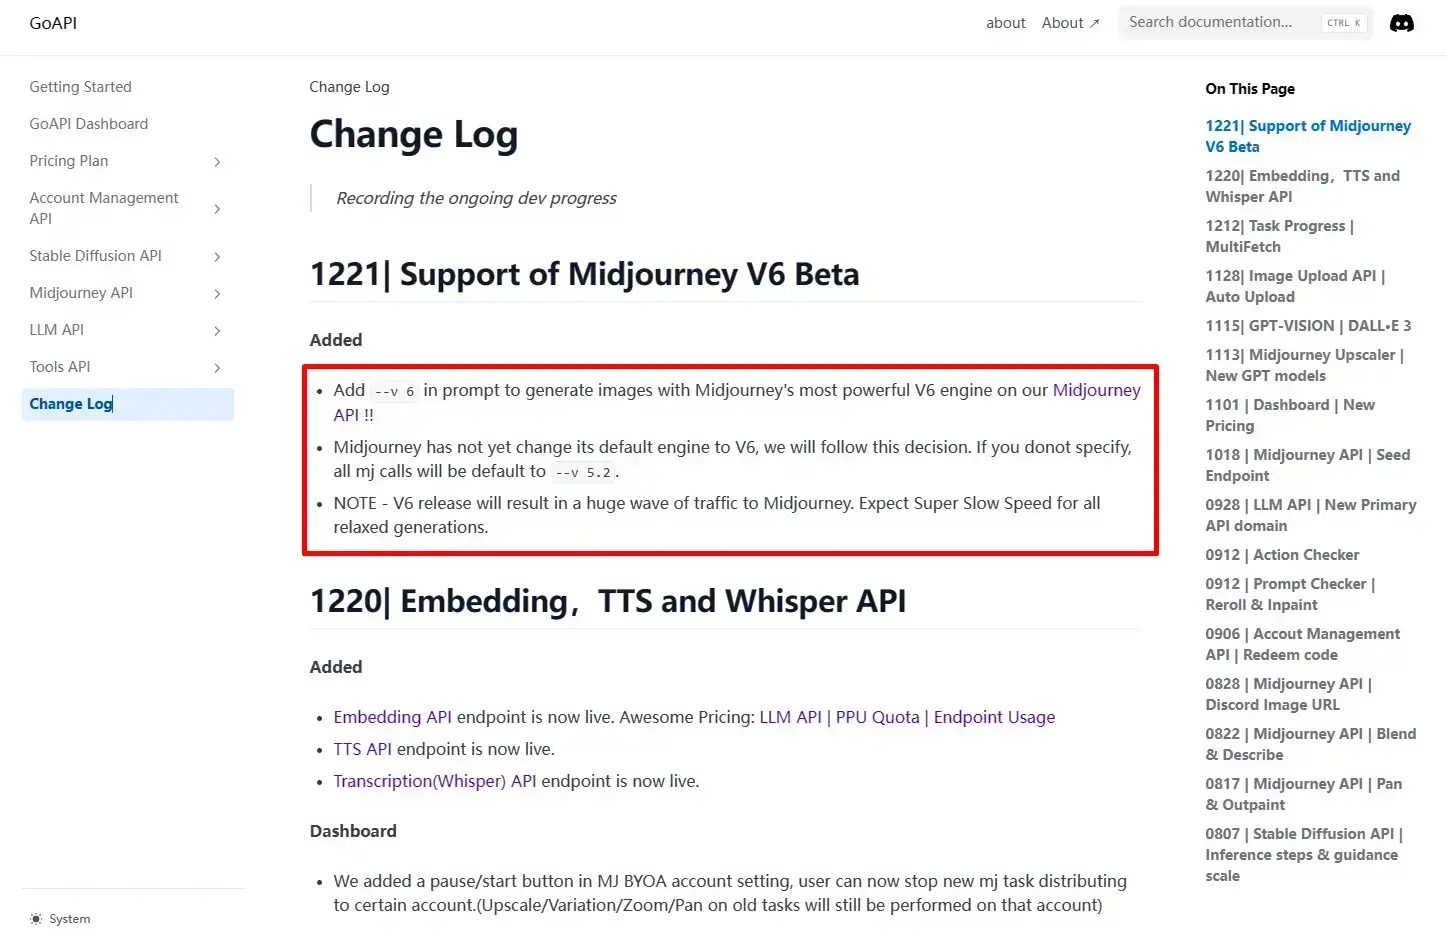 Screenshot of GoAPI's Midjourney API documentation showing our update on supporting Midjourney v6